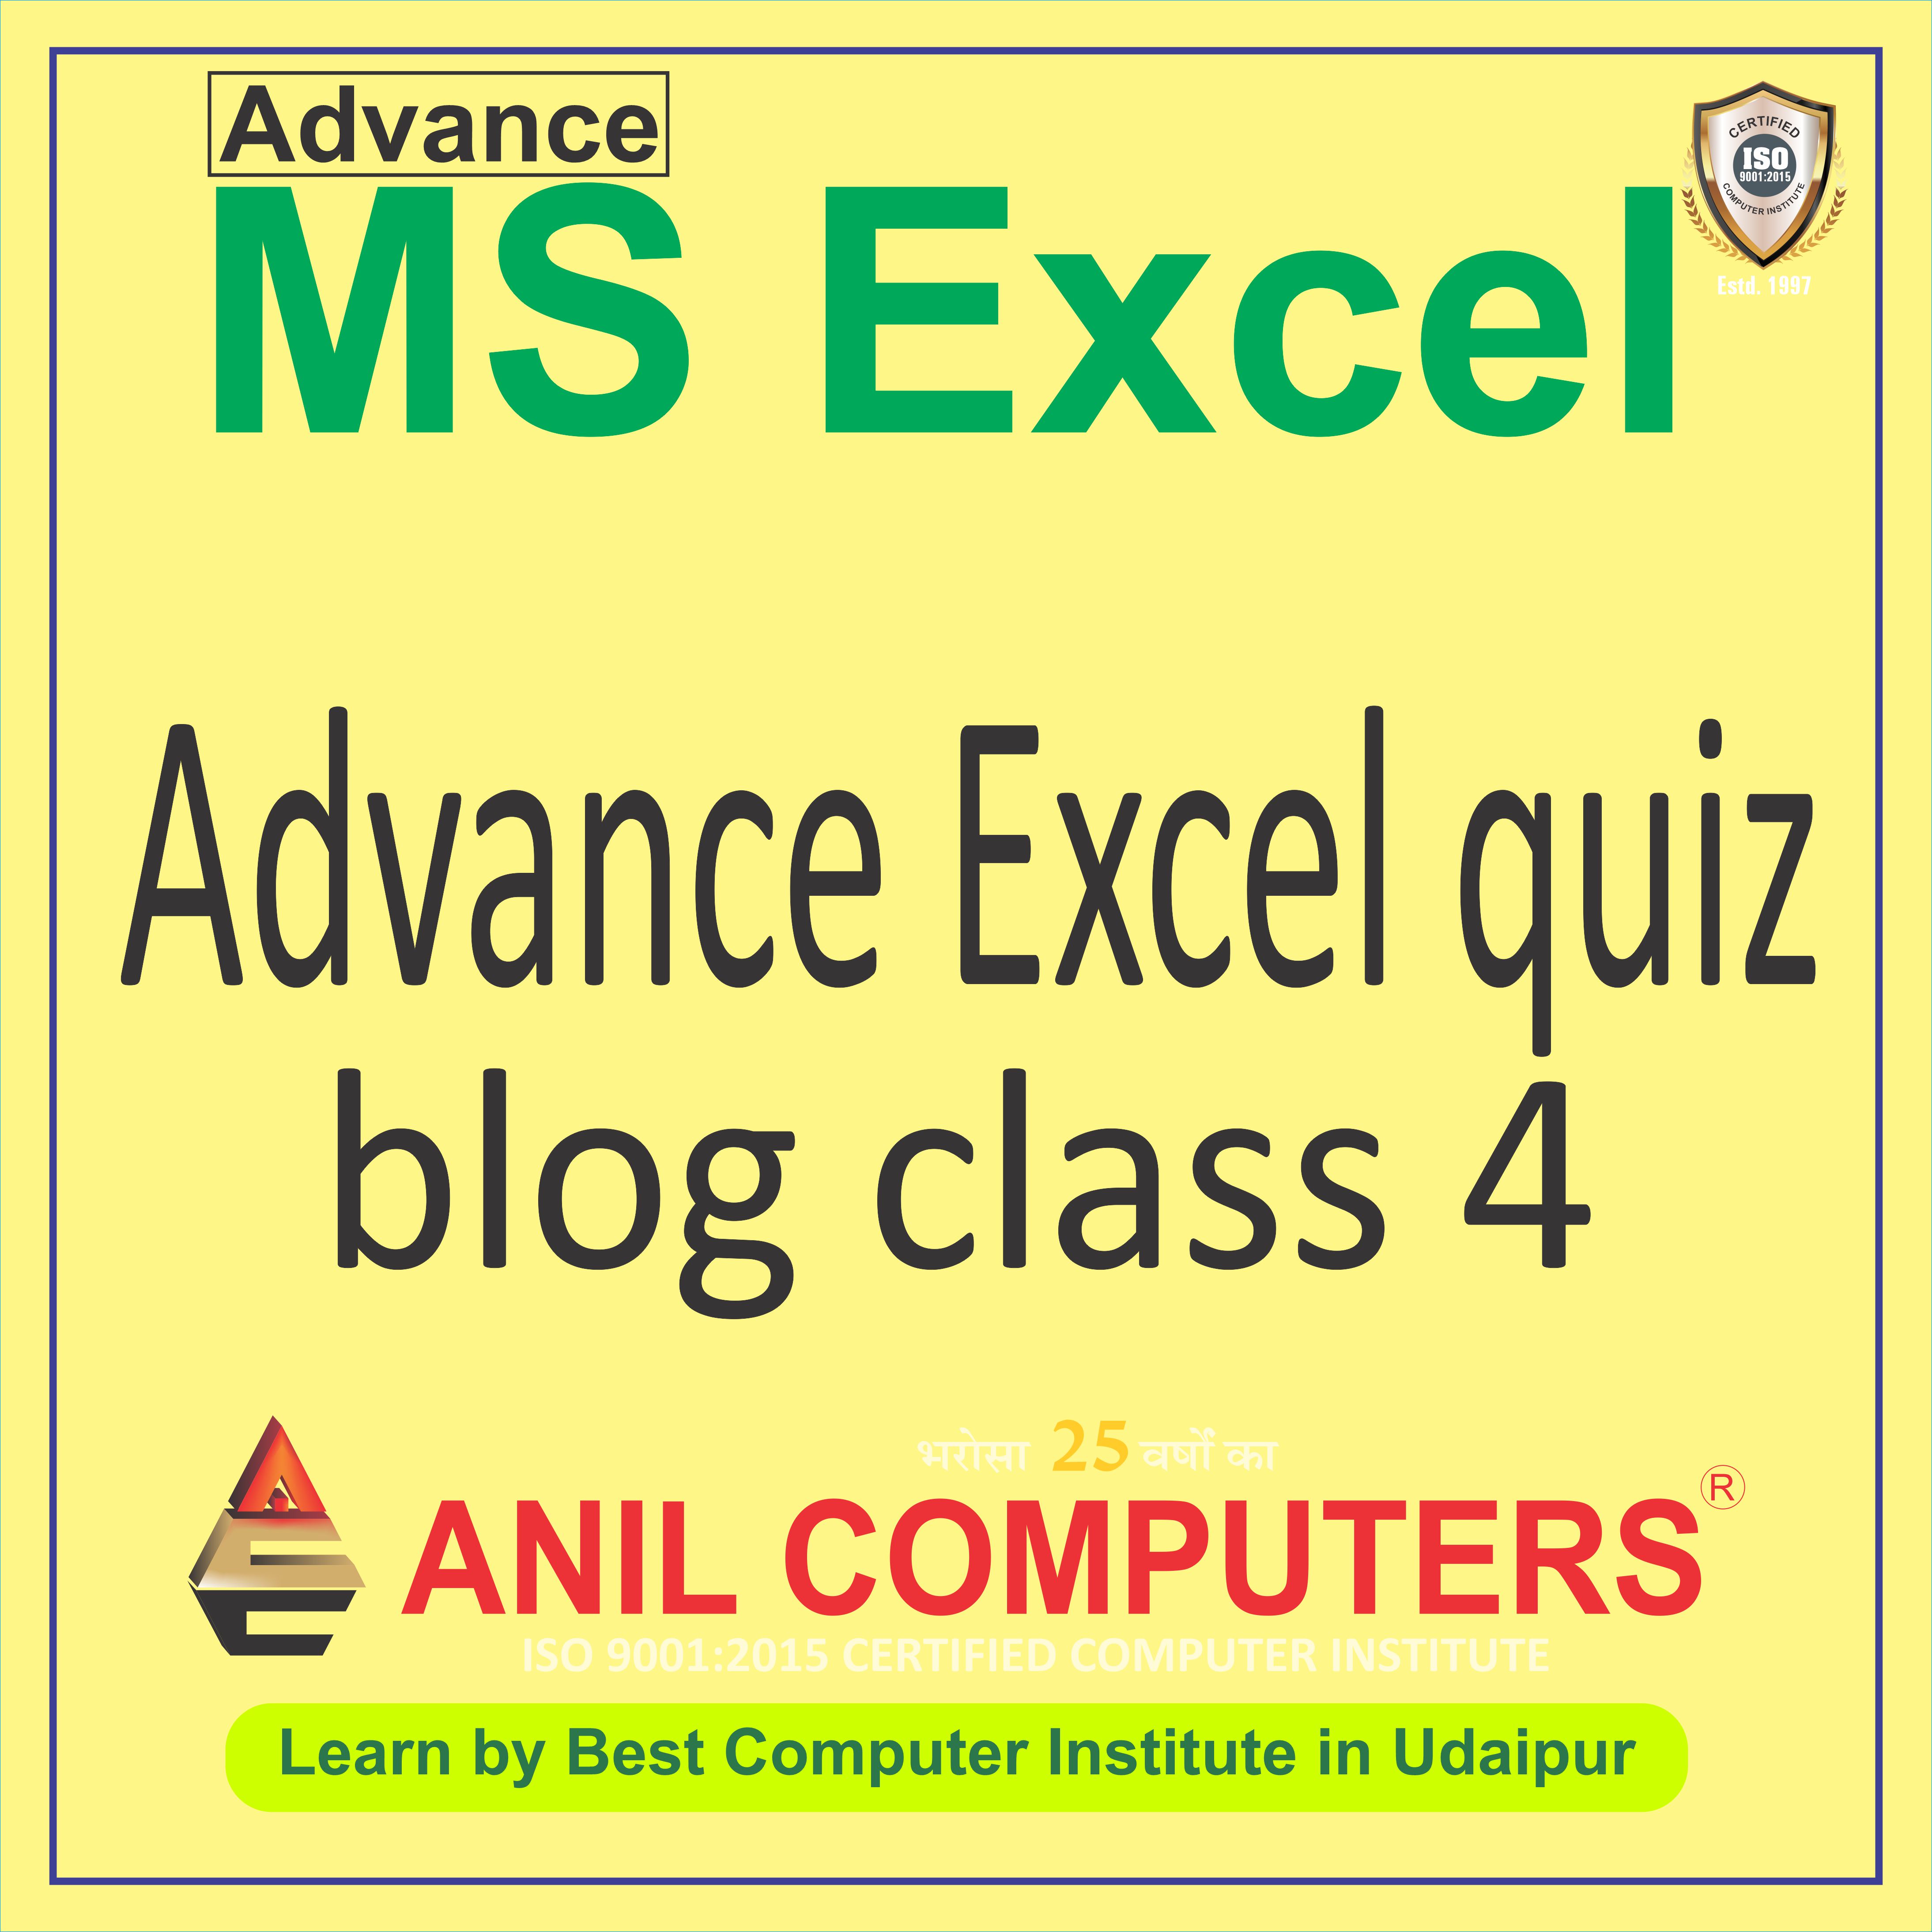 Advance Excel quiz blog class 4